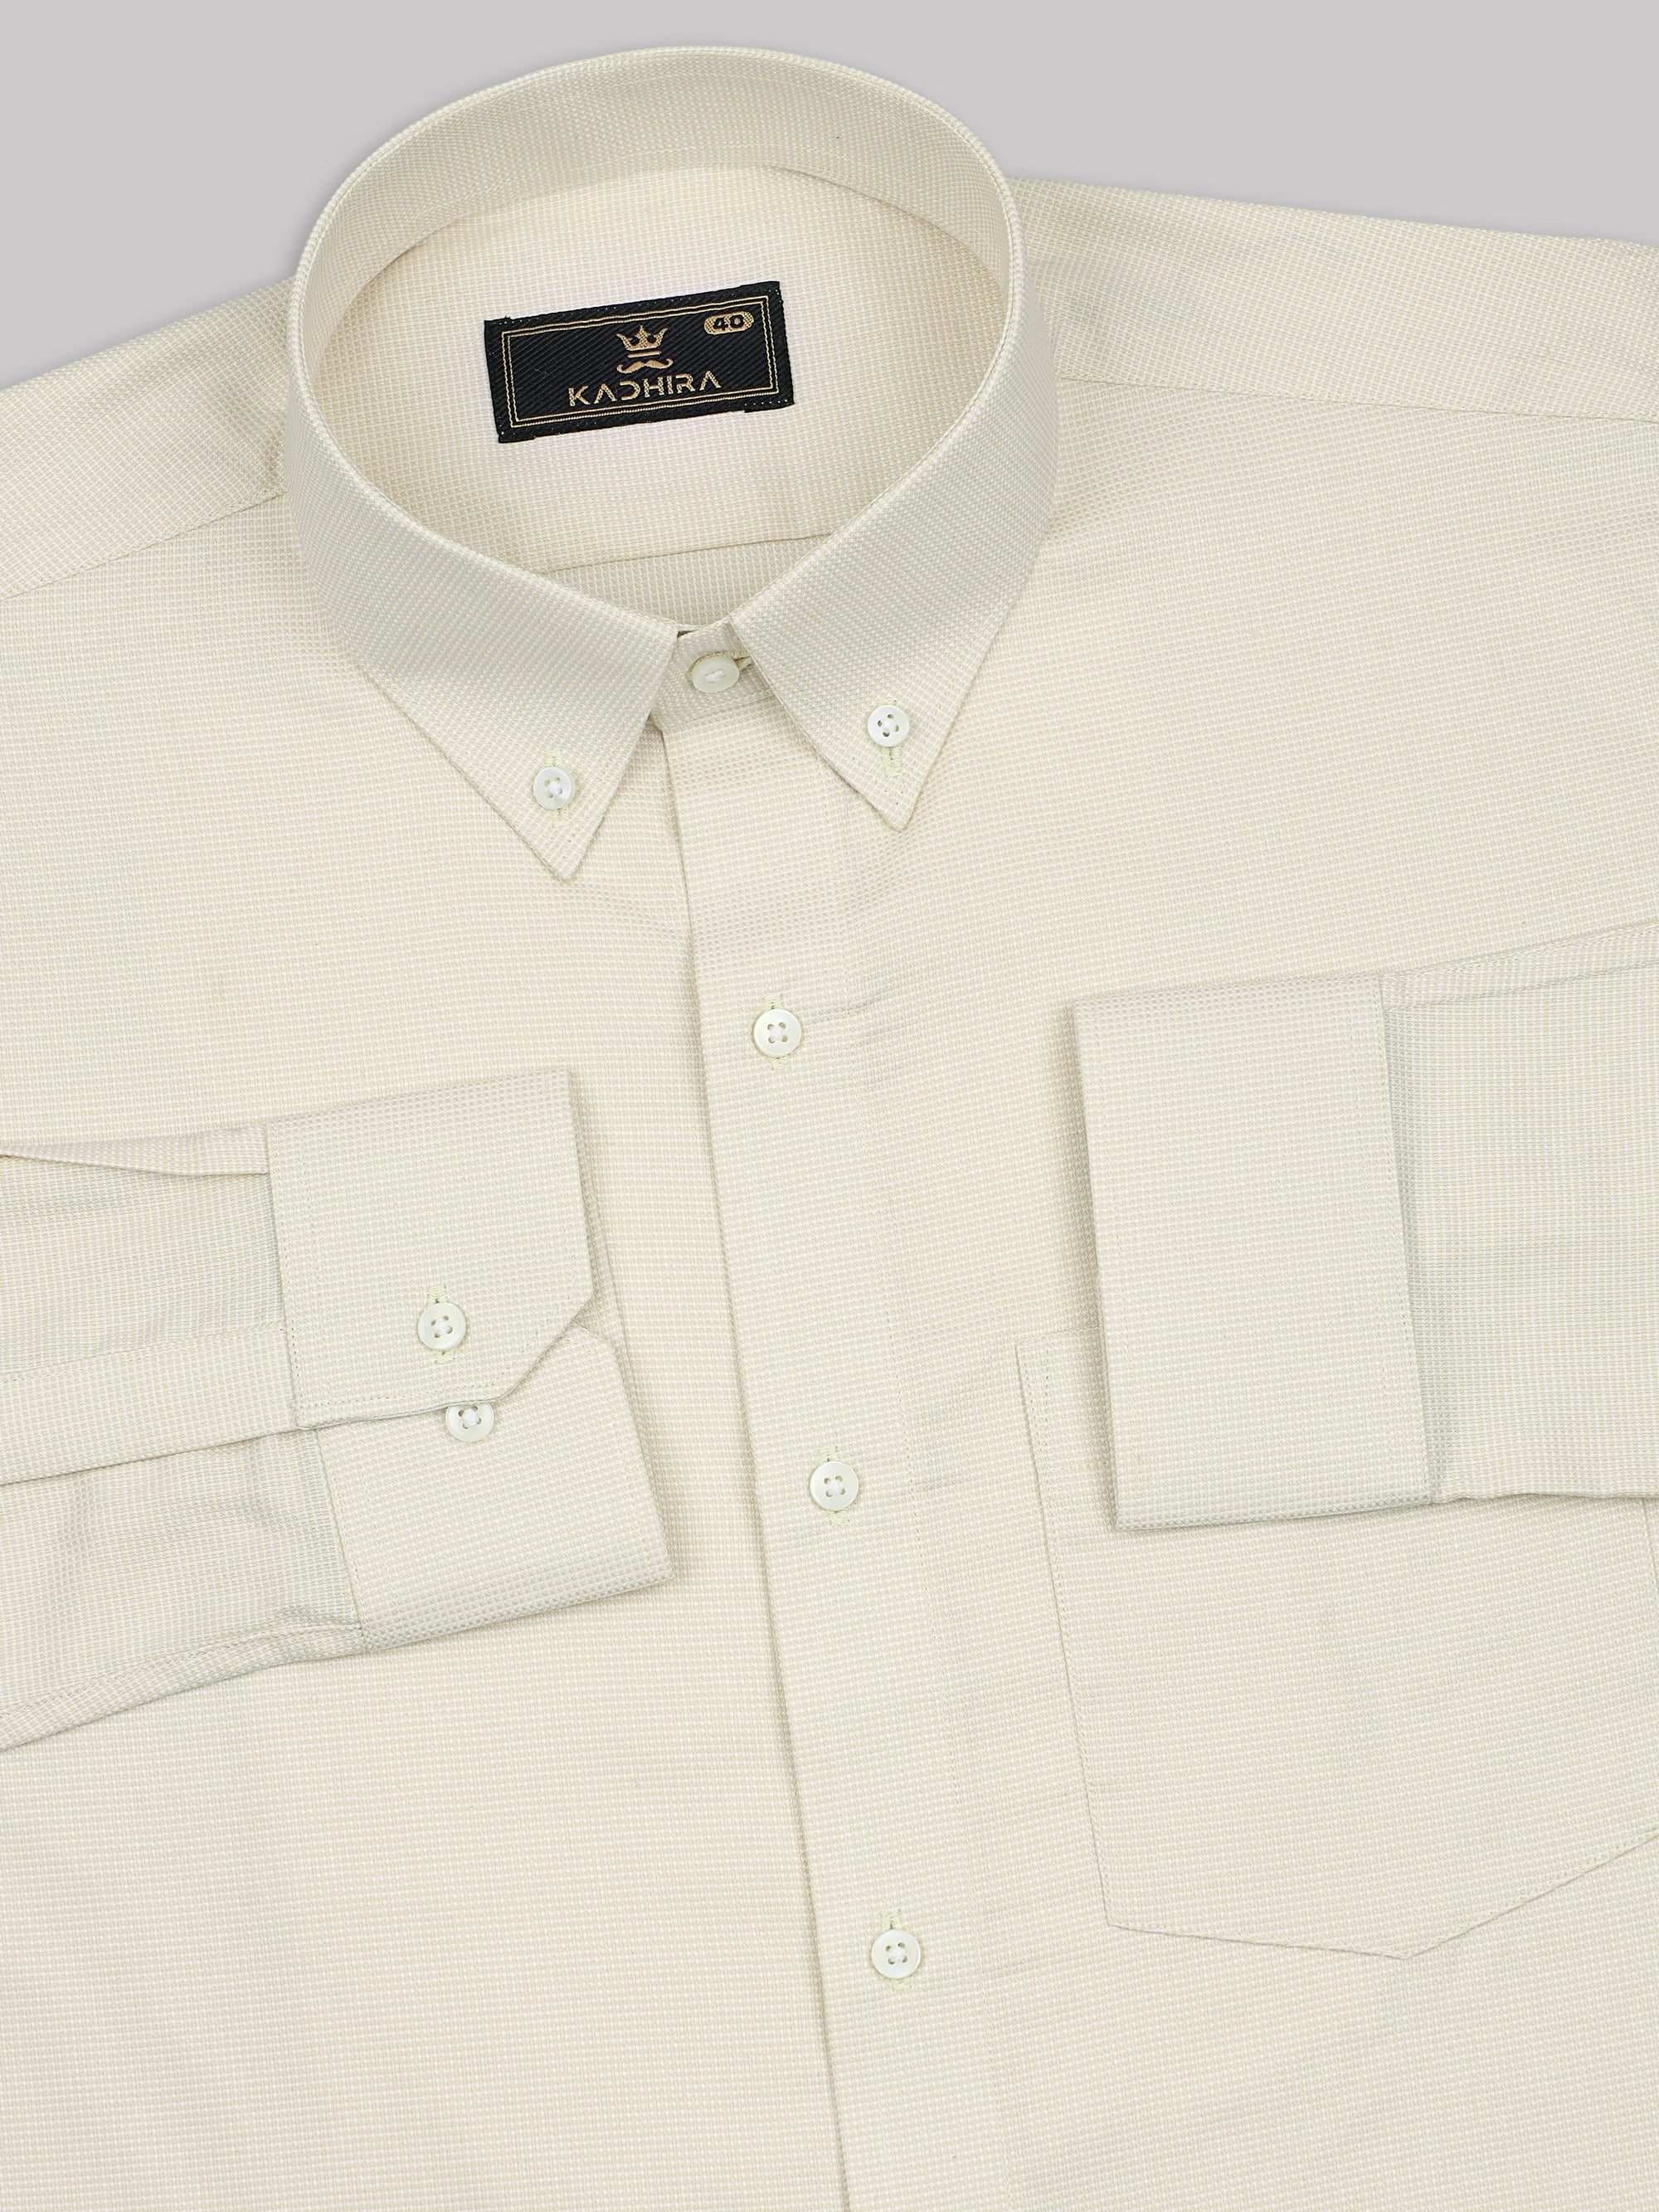 Pearl Cream Button Down Premium Giza Cotton Shirt